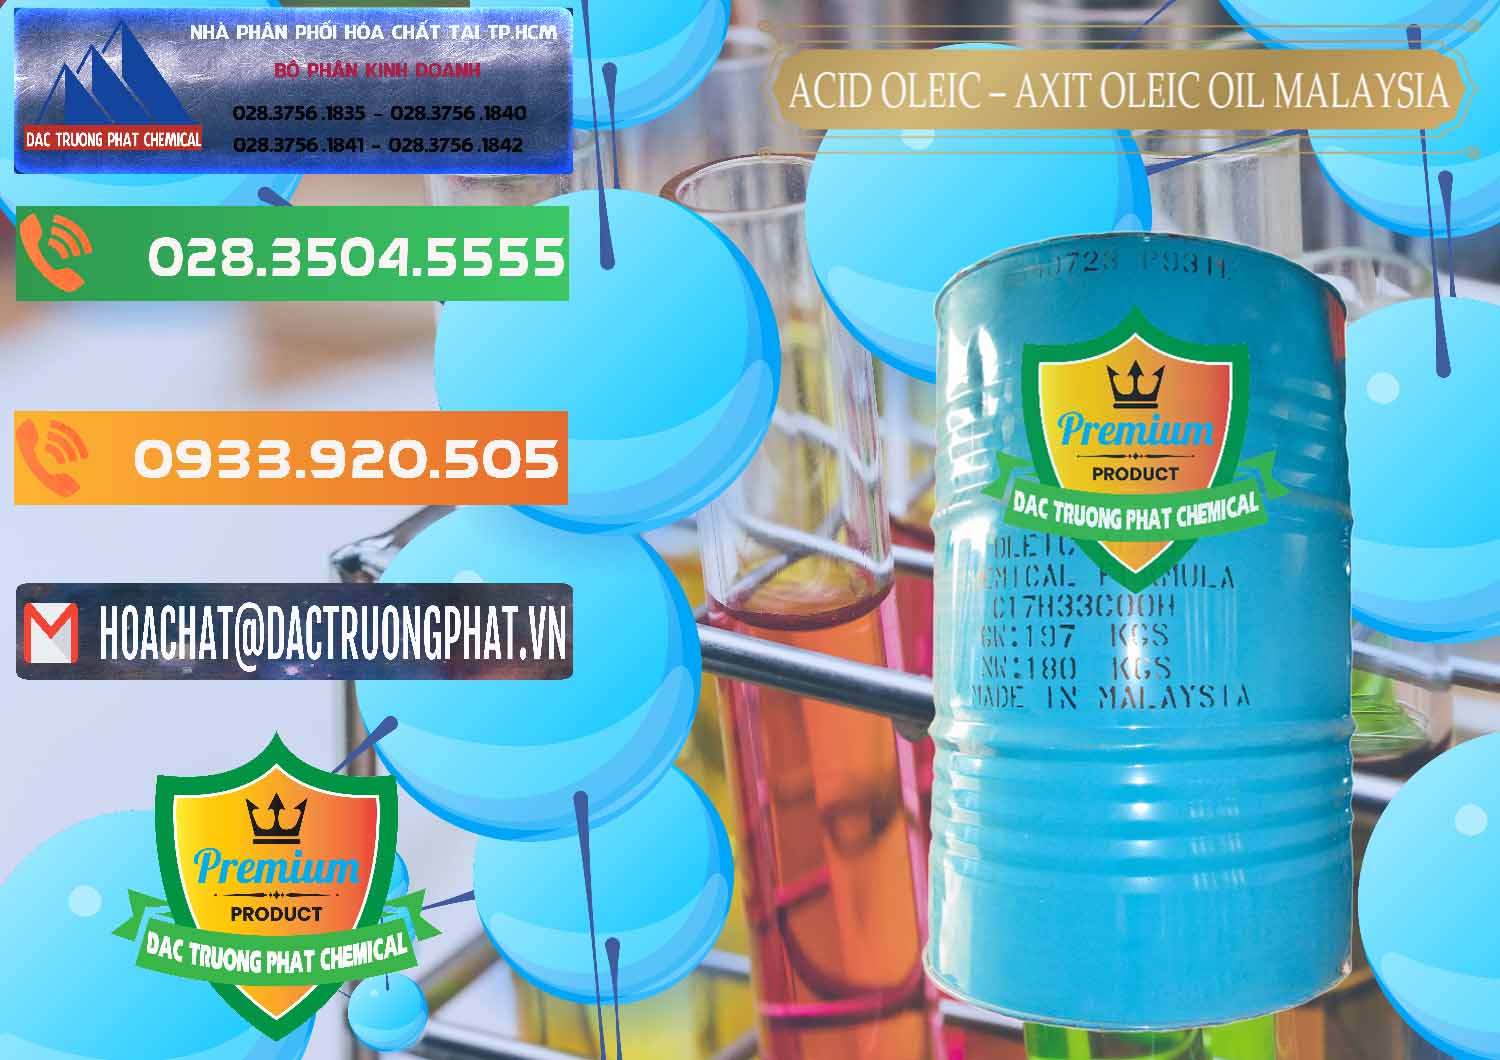 Phân phối _ bán Acid Oleic – Axit Oleic Oil Malaysia - 0013 - Cty nhập khẩu ( cung cấp ) hóa chất tại TP.HCM - hoachatxulynuoc.com.vn